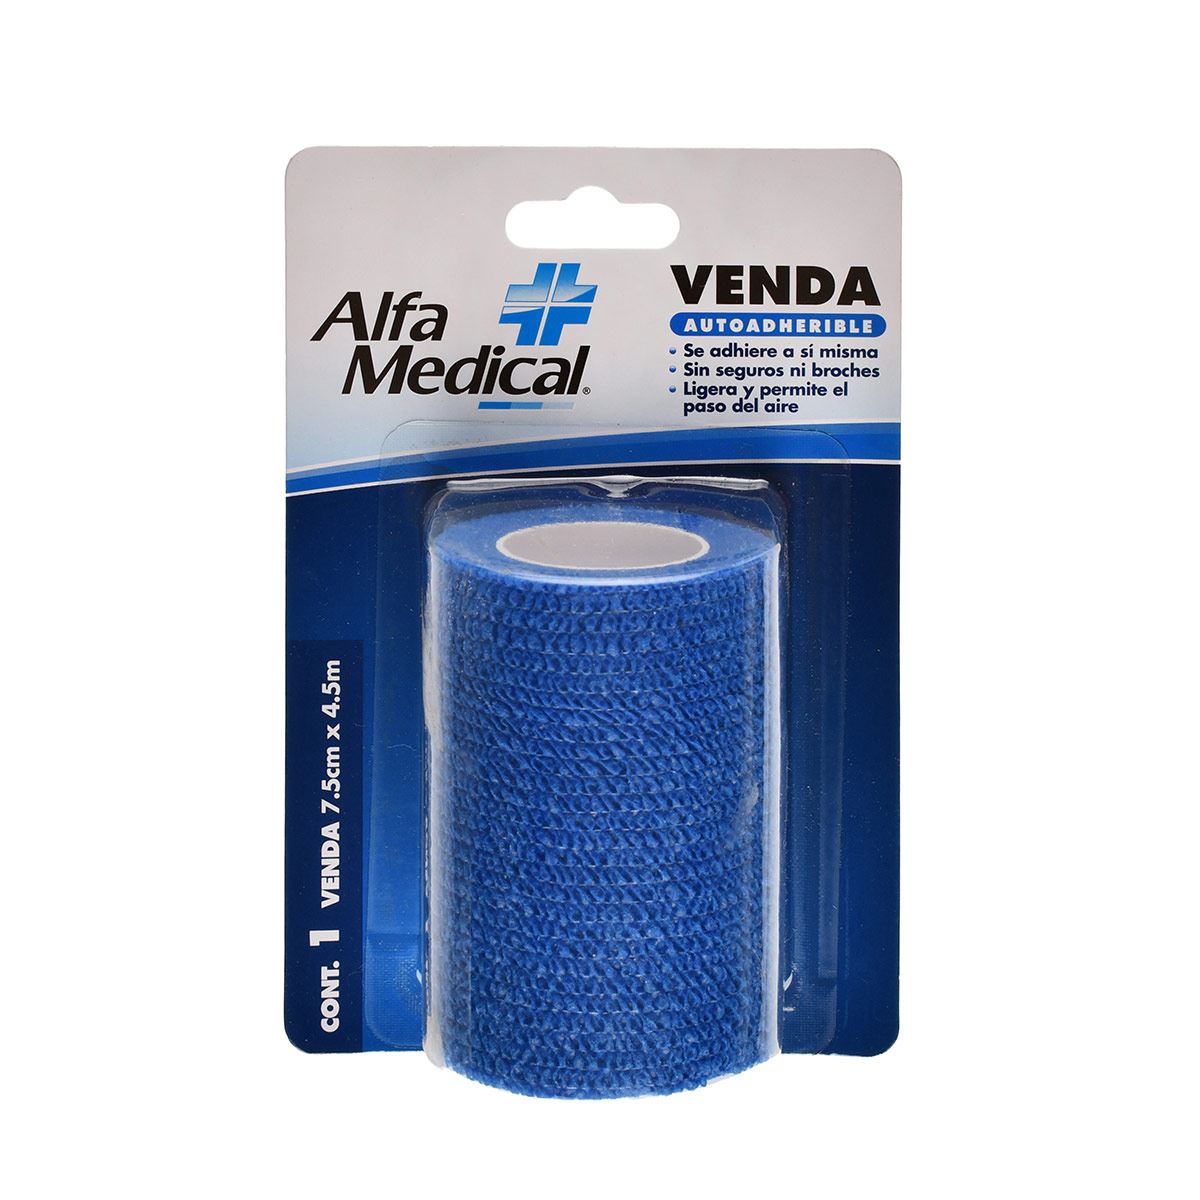 ALFA MEDICAL  VENDA AUTOADHERIBLE 7.5 CM X 4.5 MT / NEGRA